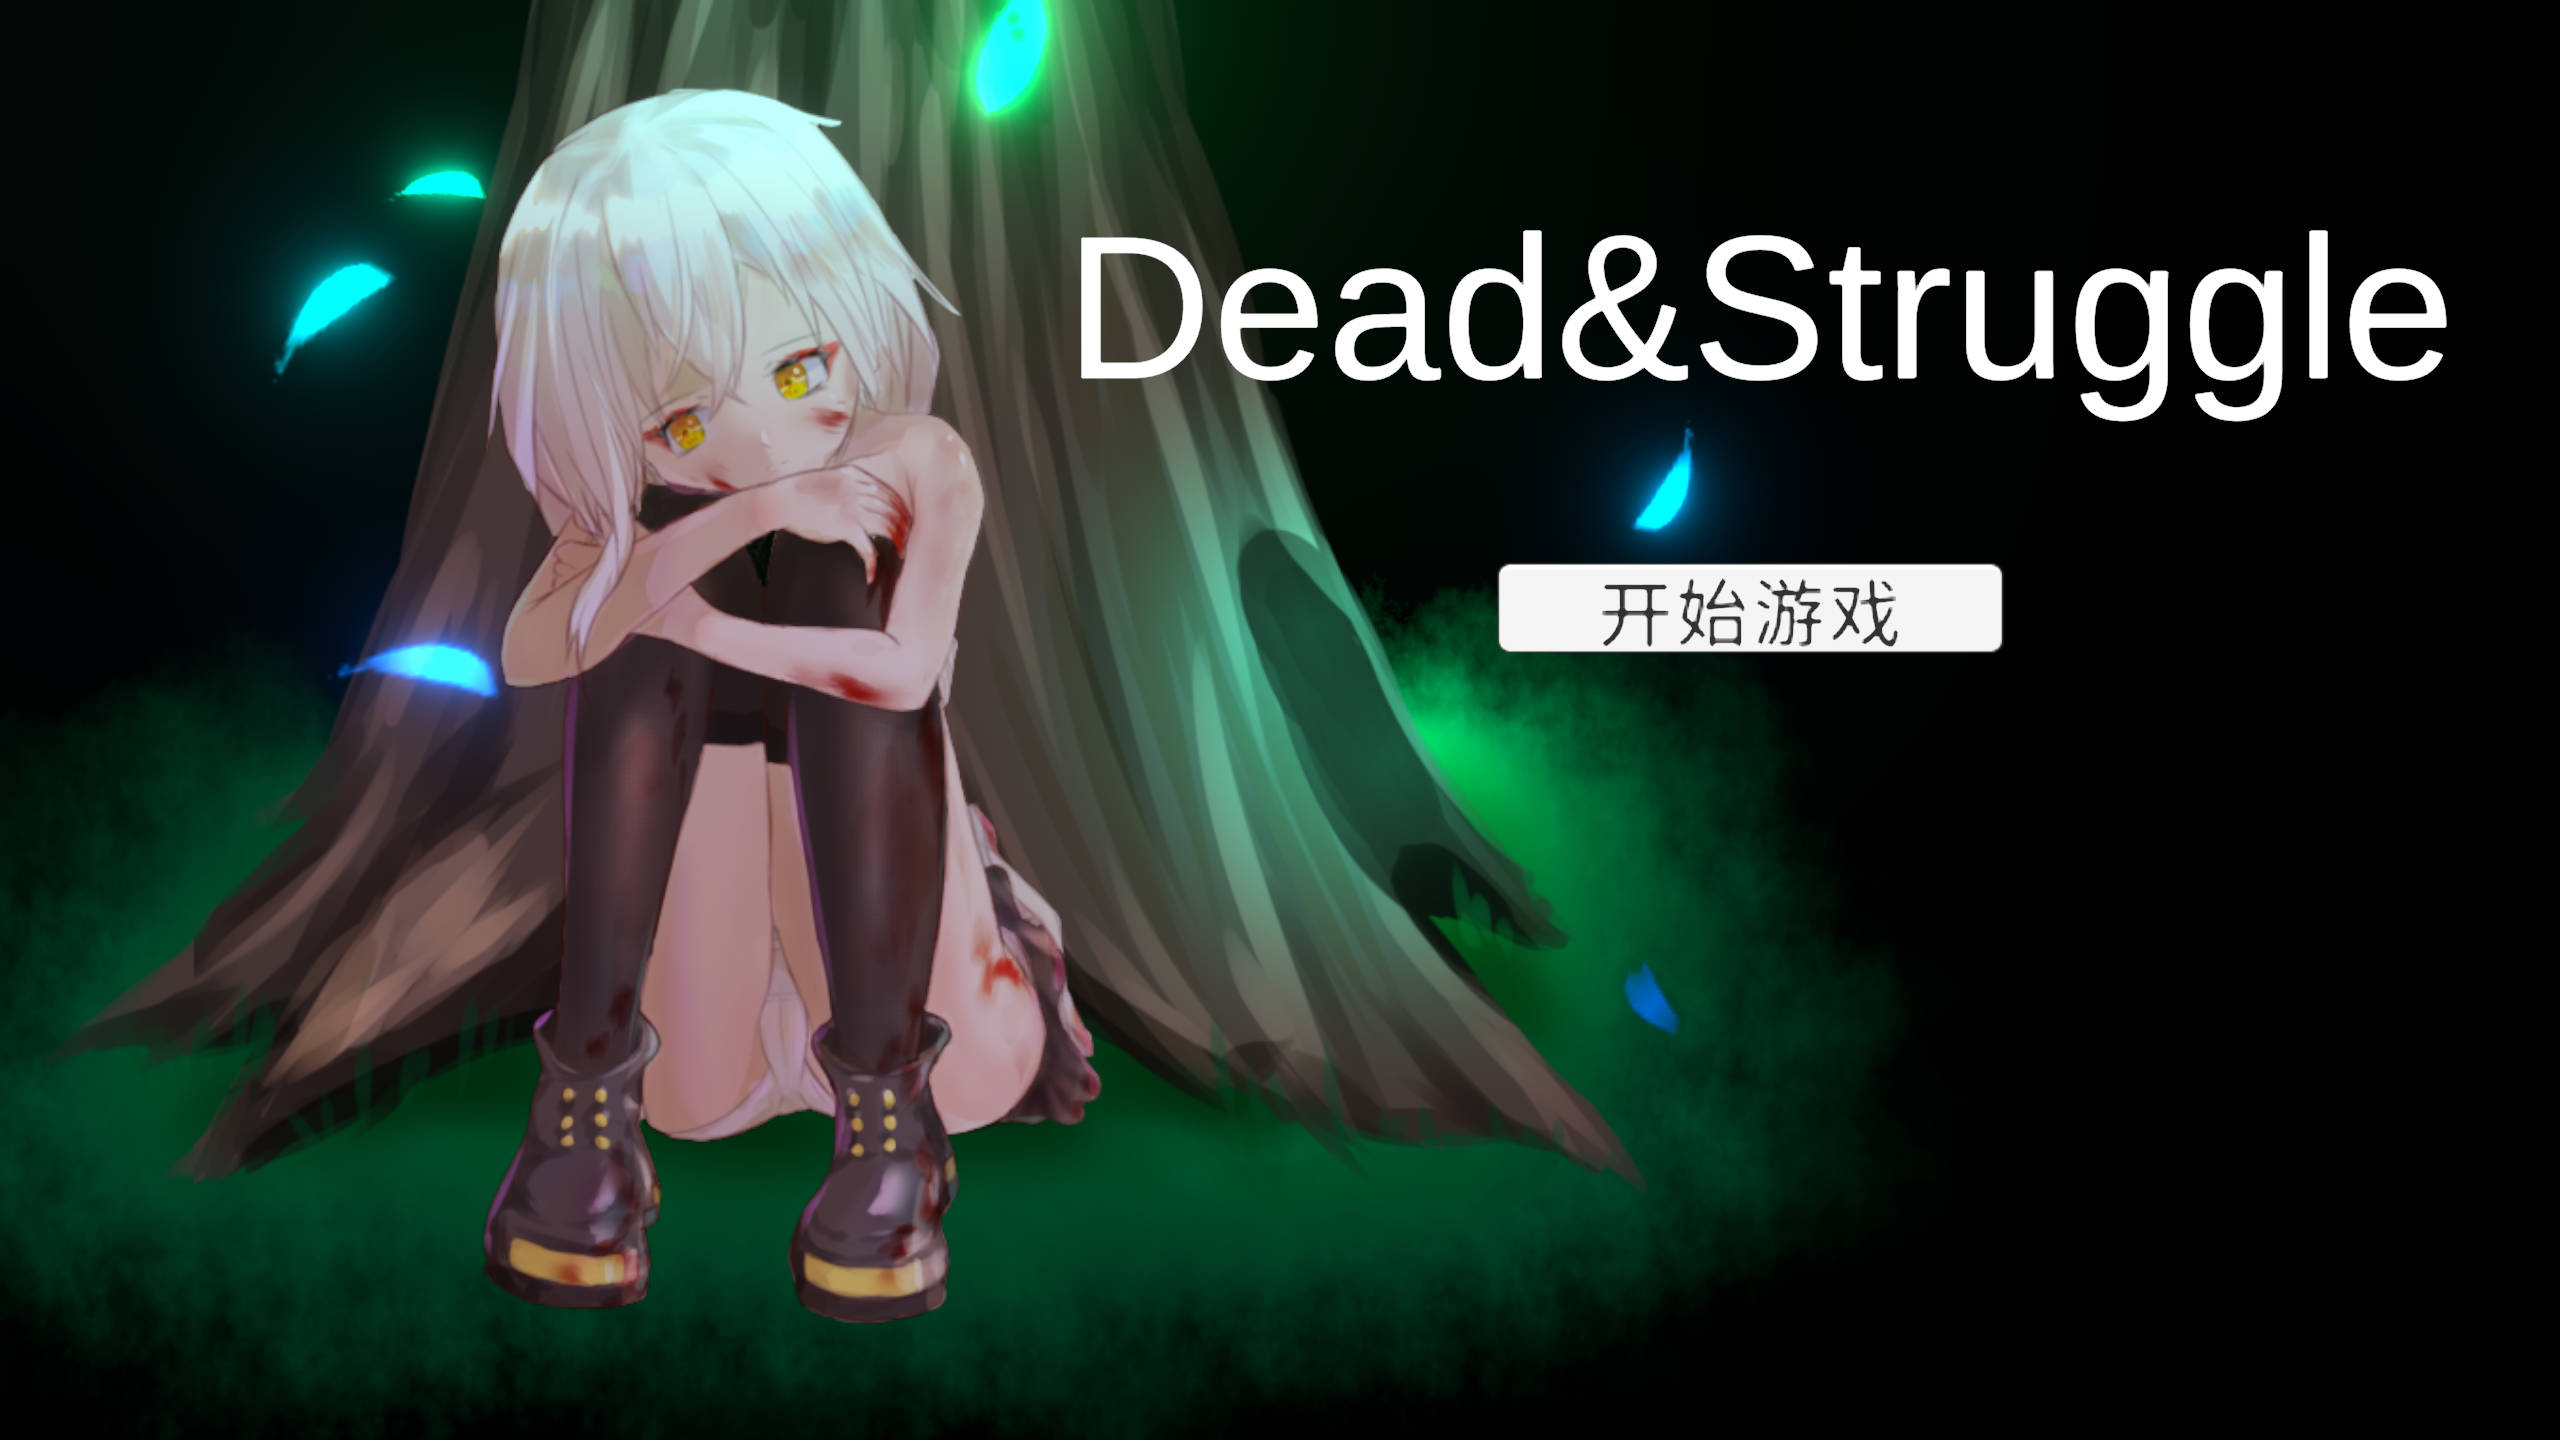 【游戏】Dead & Stuggle